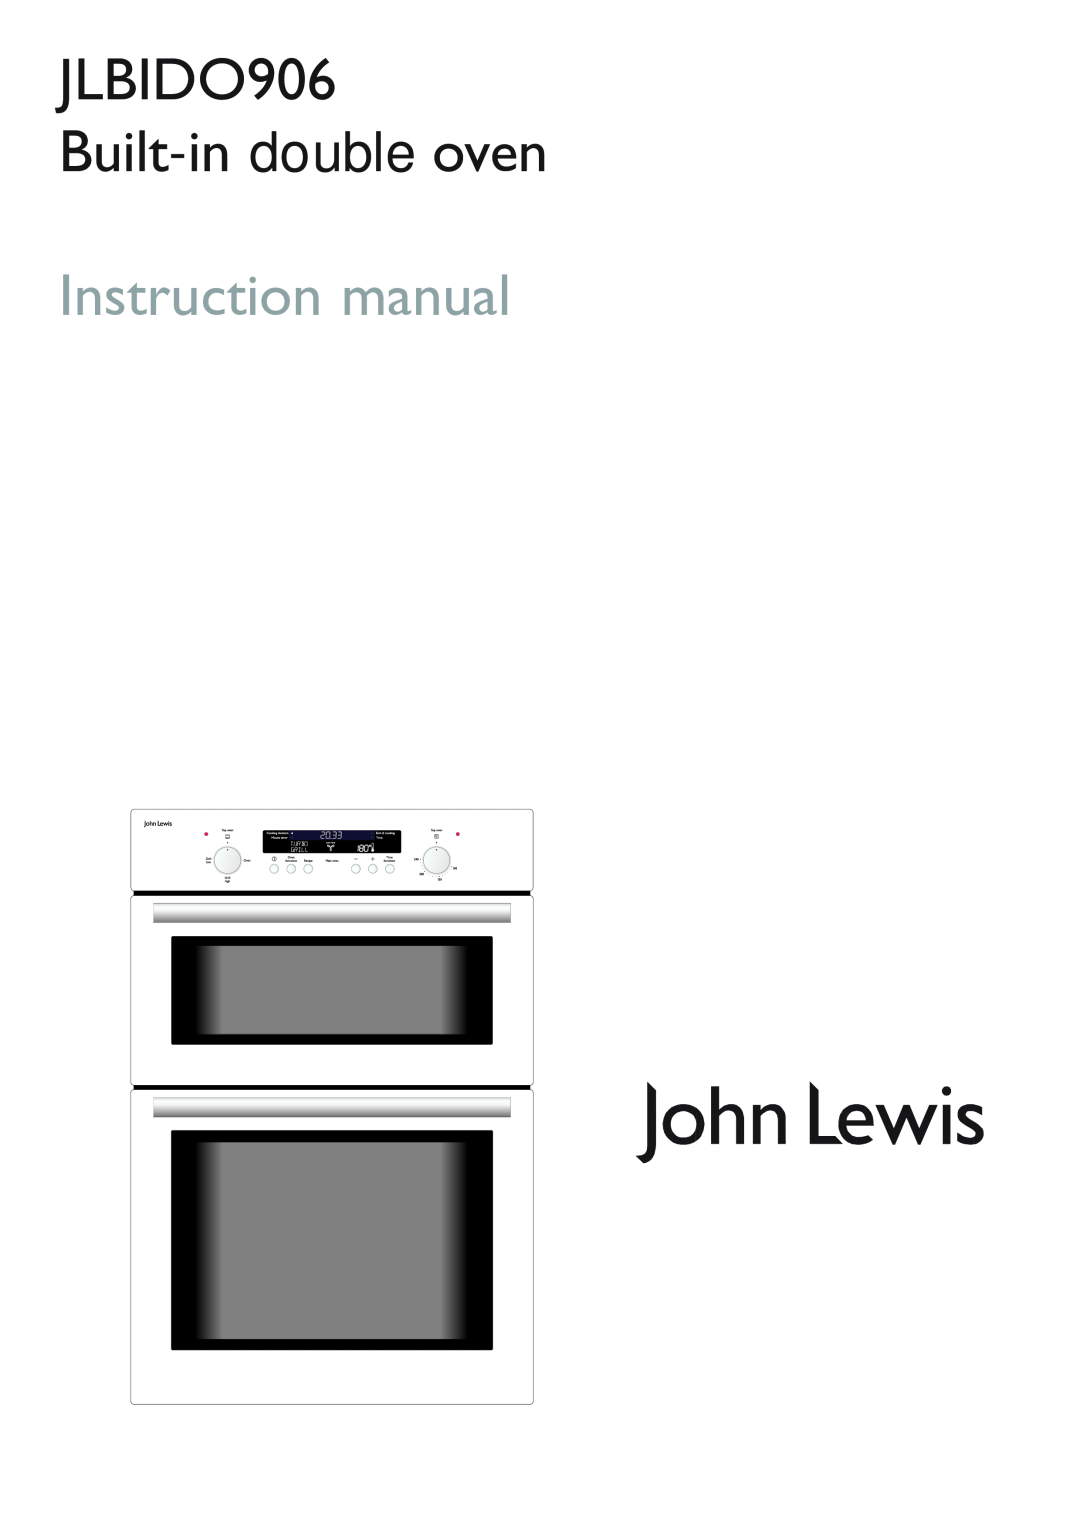 John Lewis JLBIDOS906 instruction manual JLBIDO906 Combi Built-indouble oven 